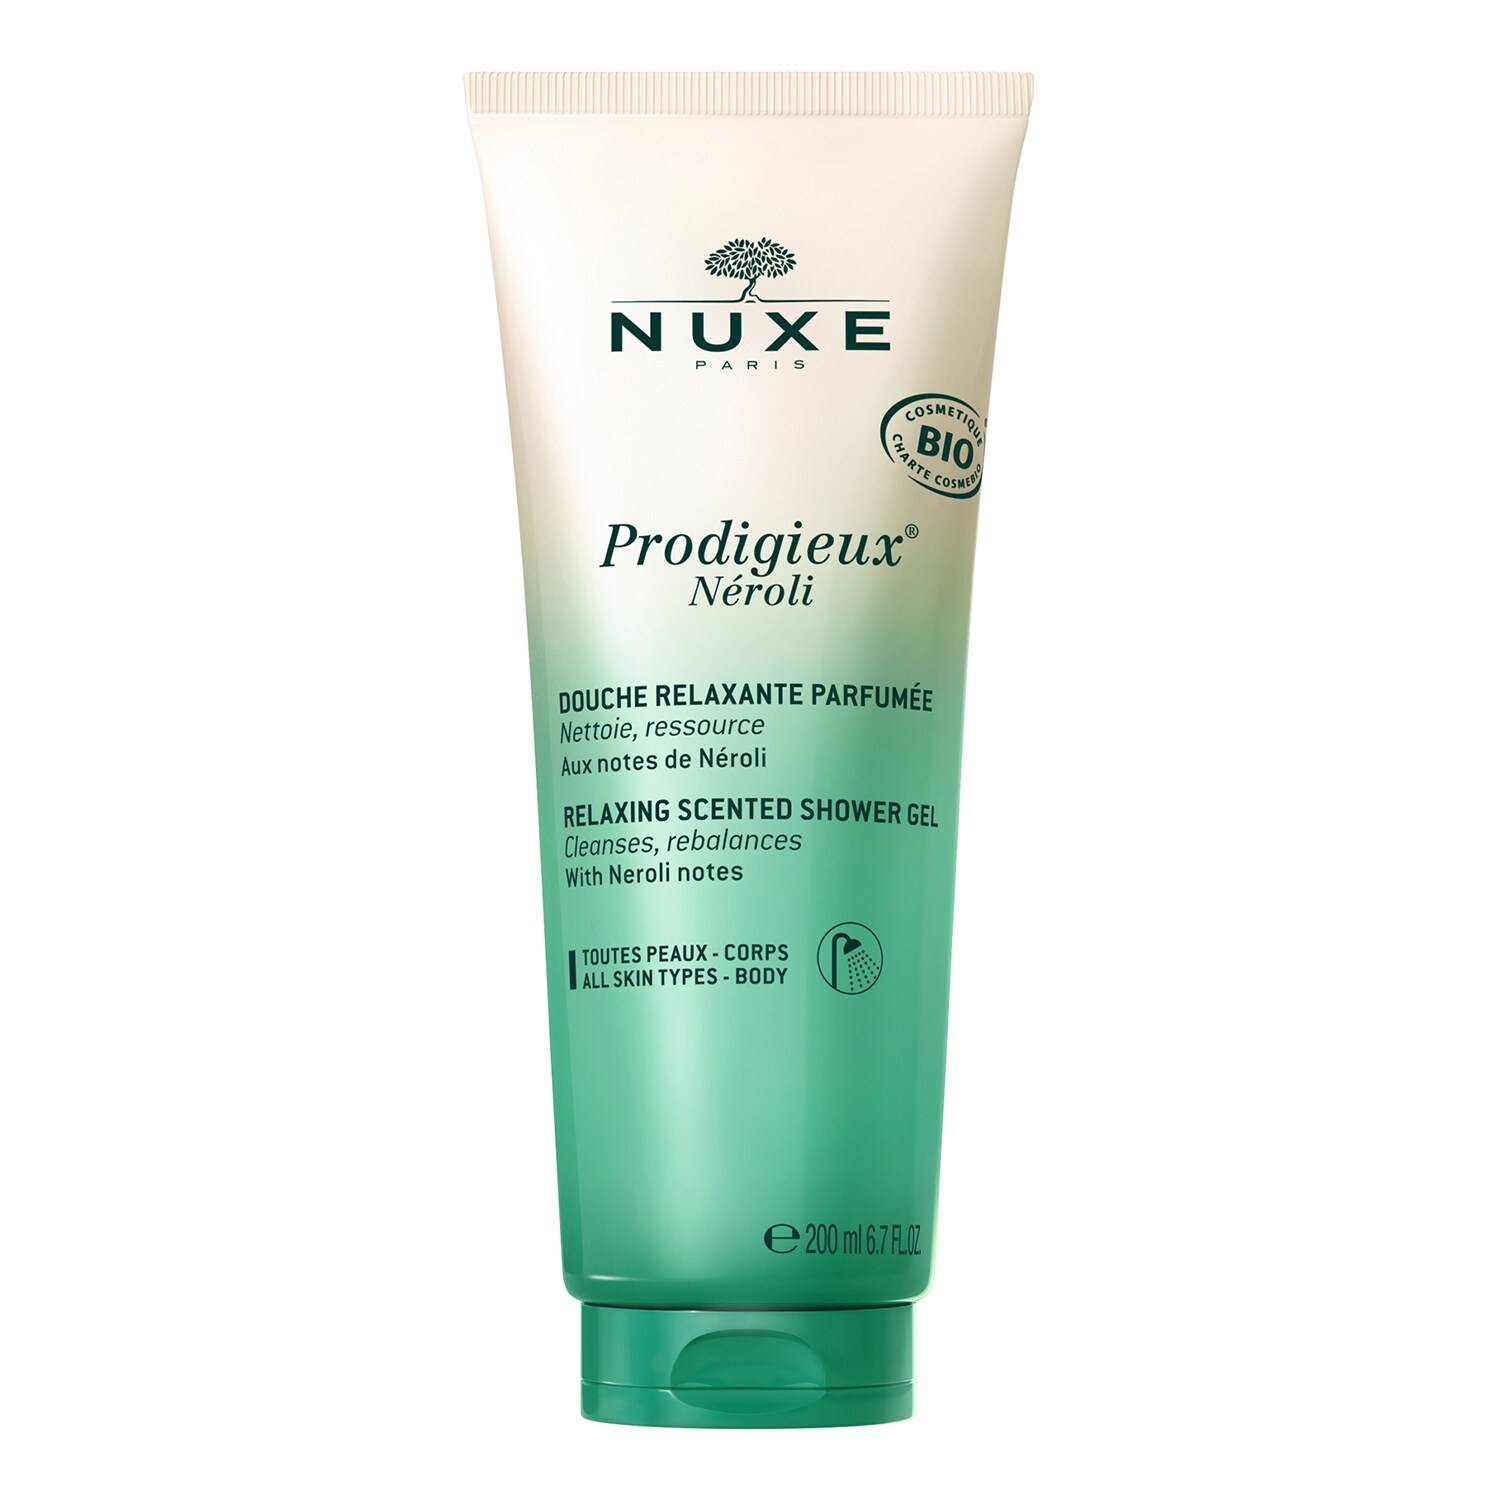 Nuxe Prodigieux Neroli - Relaxing Scented Shower Gel 200Ml